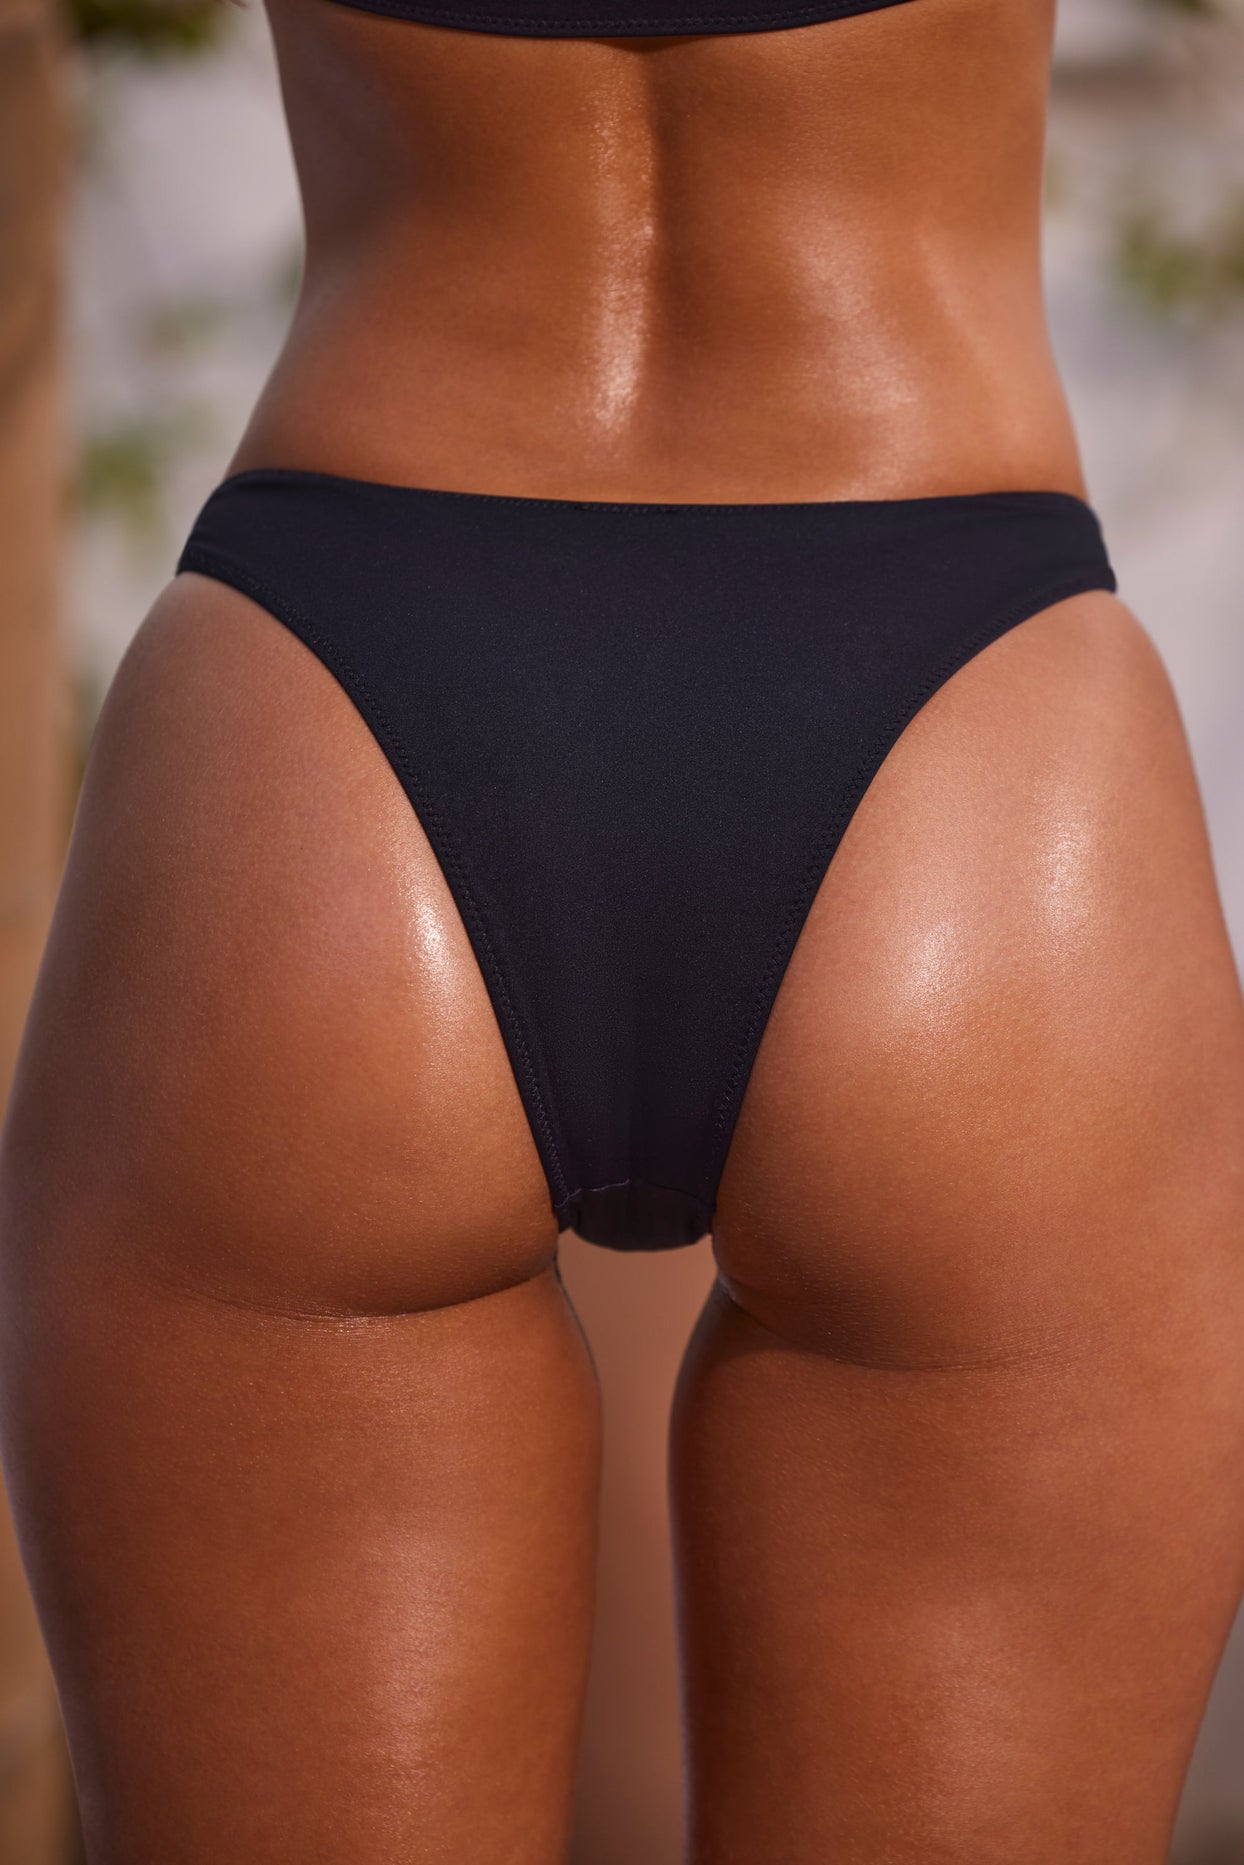 Lucky Brand BLACK Coastal Palms Hipster Bikini Swim Brazil